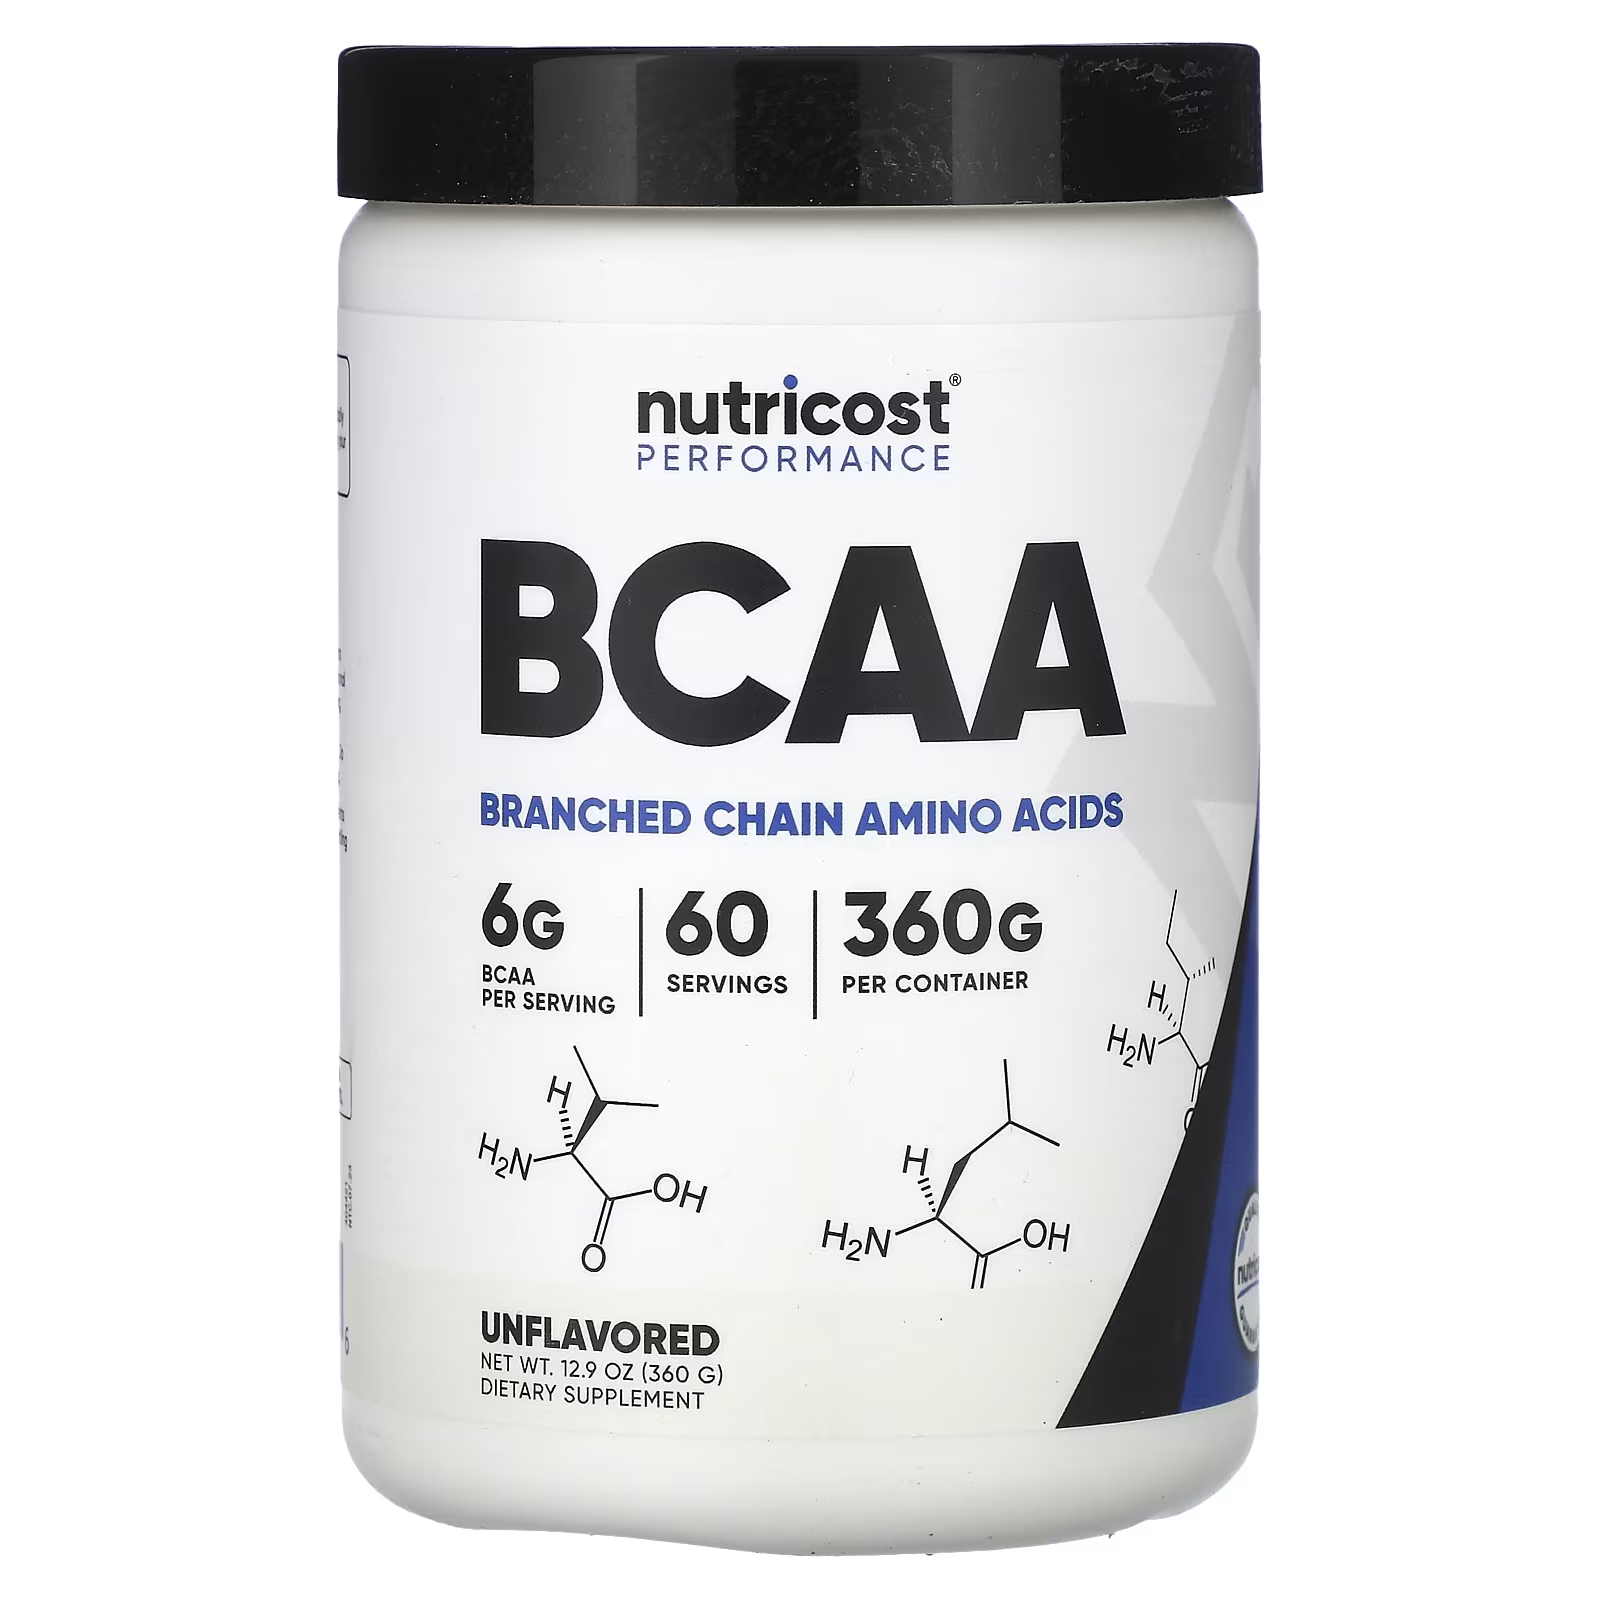 Пищевая добавка Nutricost Performance BCAA, 360 г цена и фото